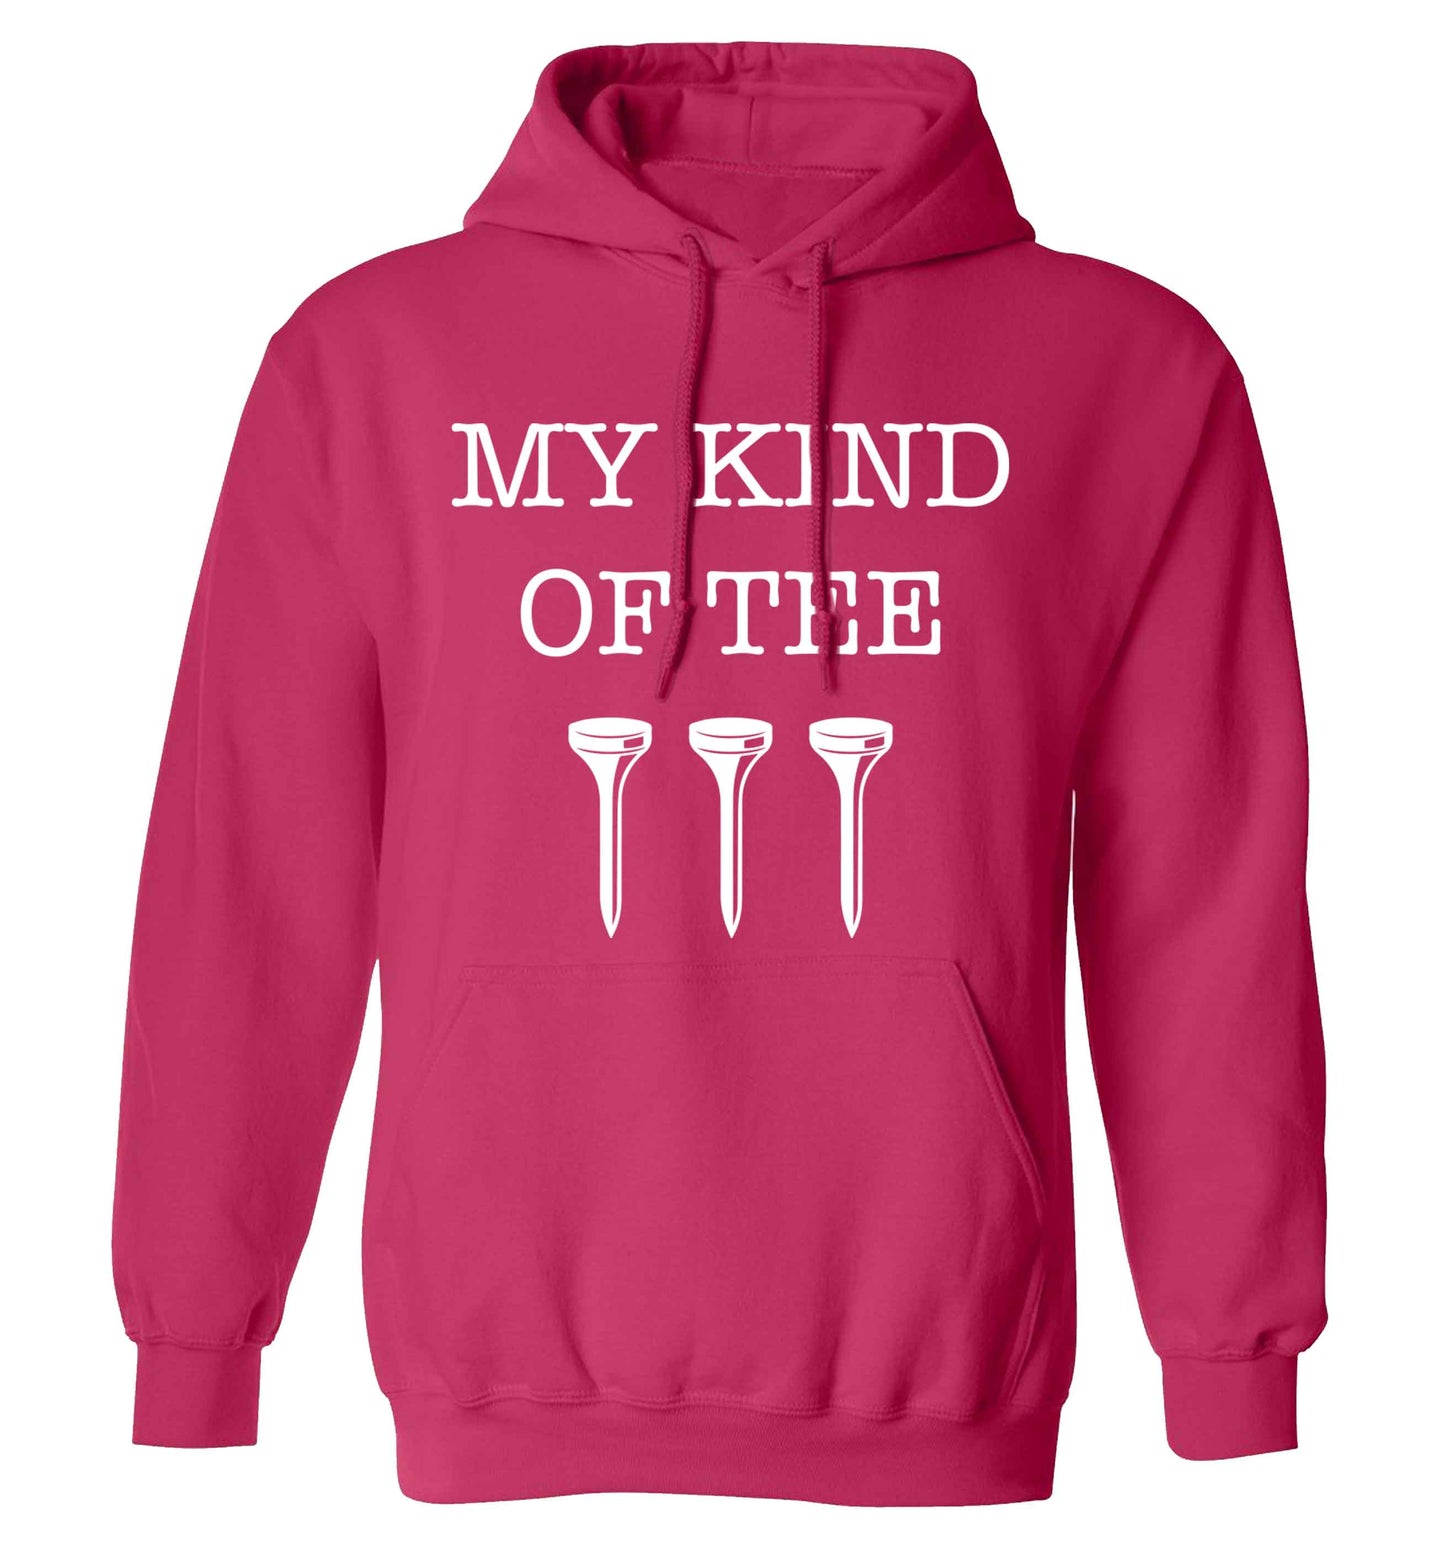 My kind of tee adults unisex pink hoodie 2XL